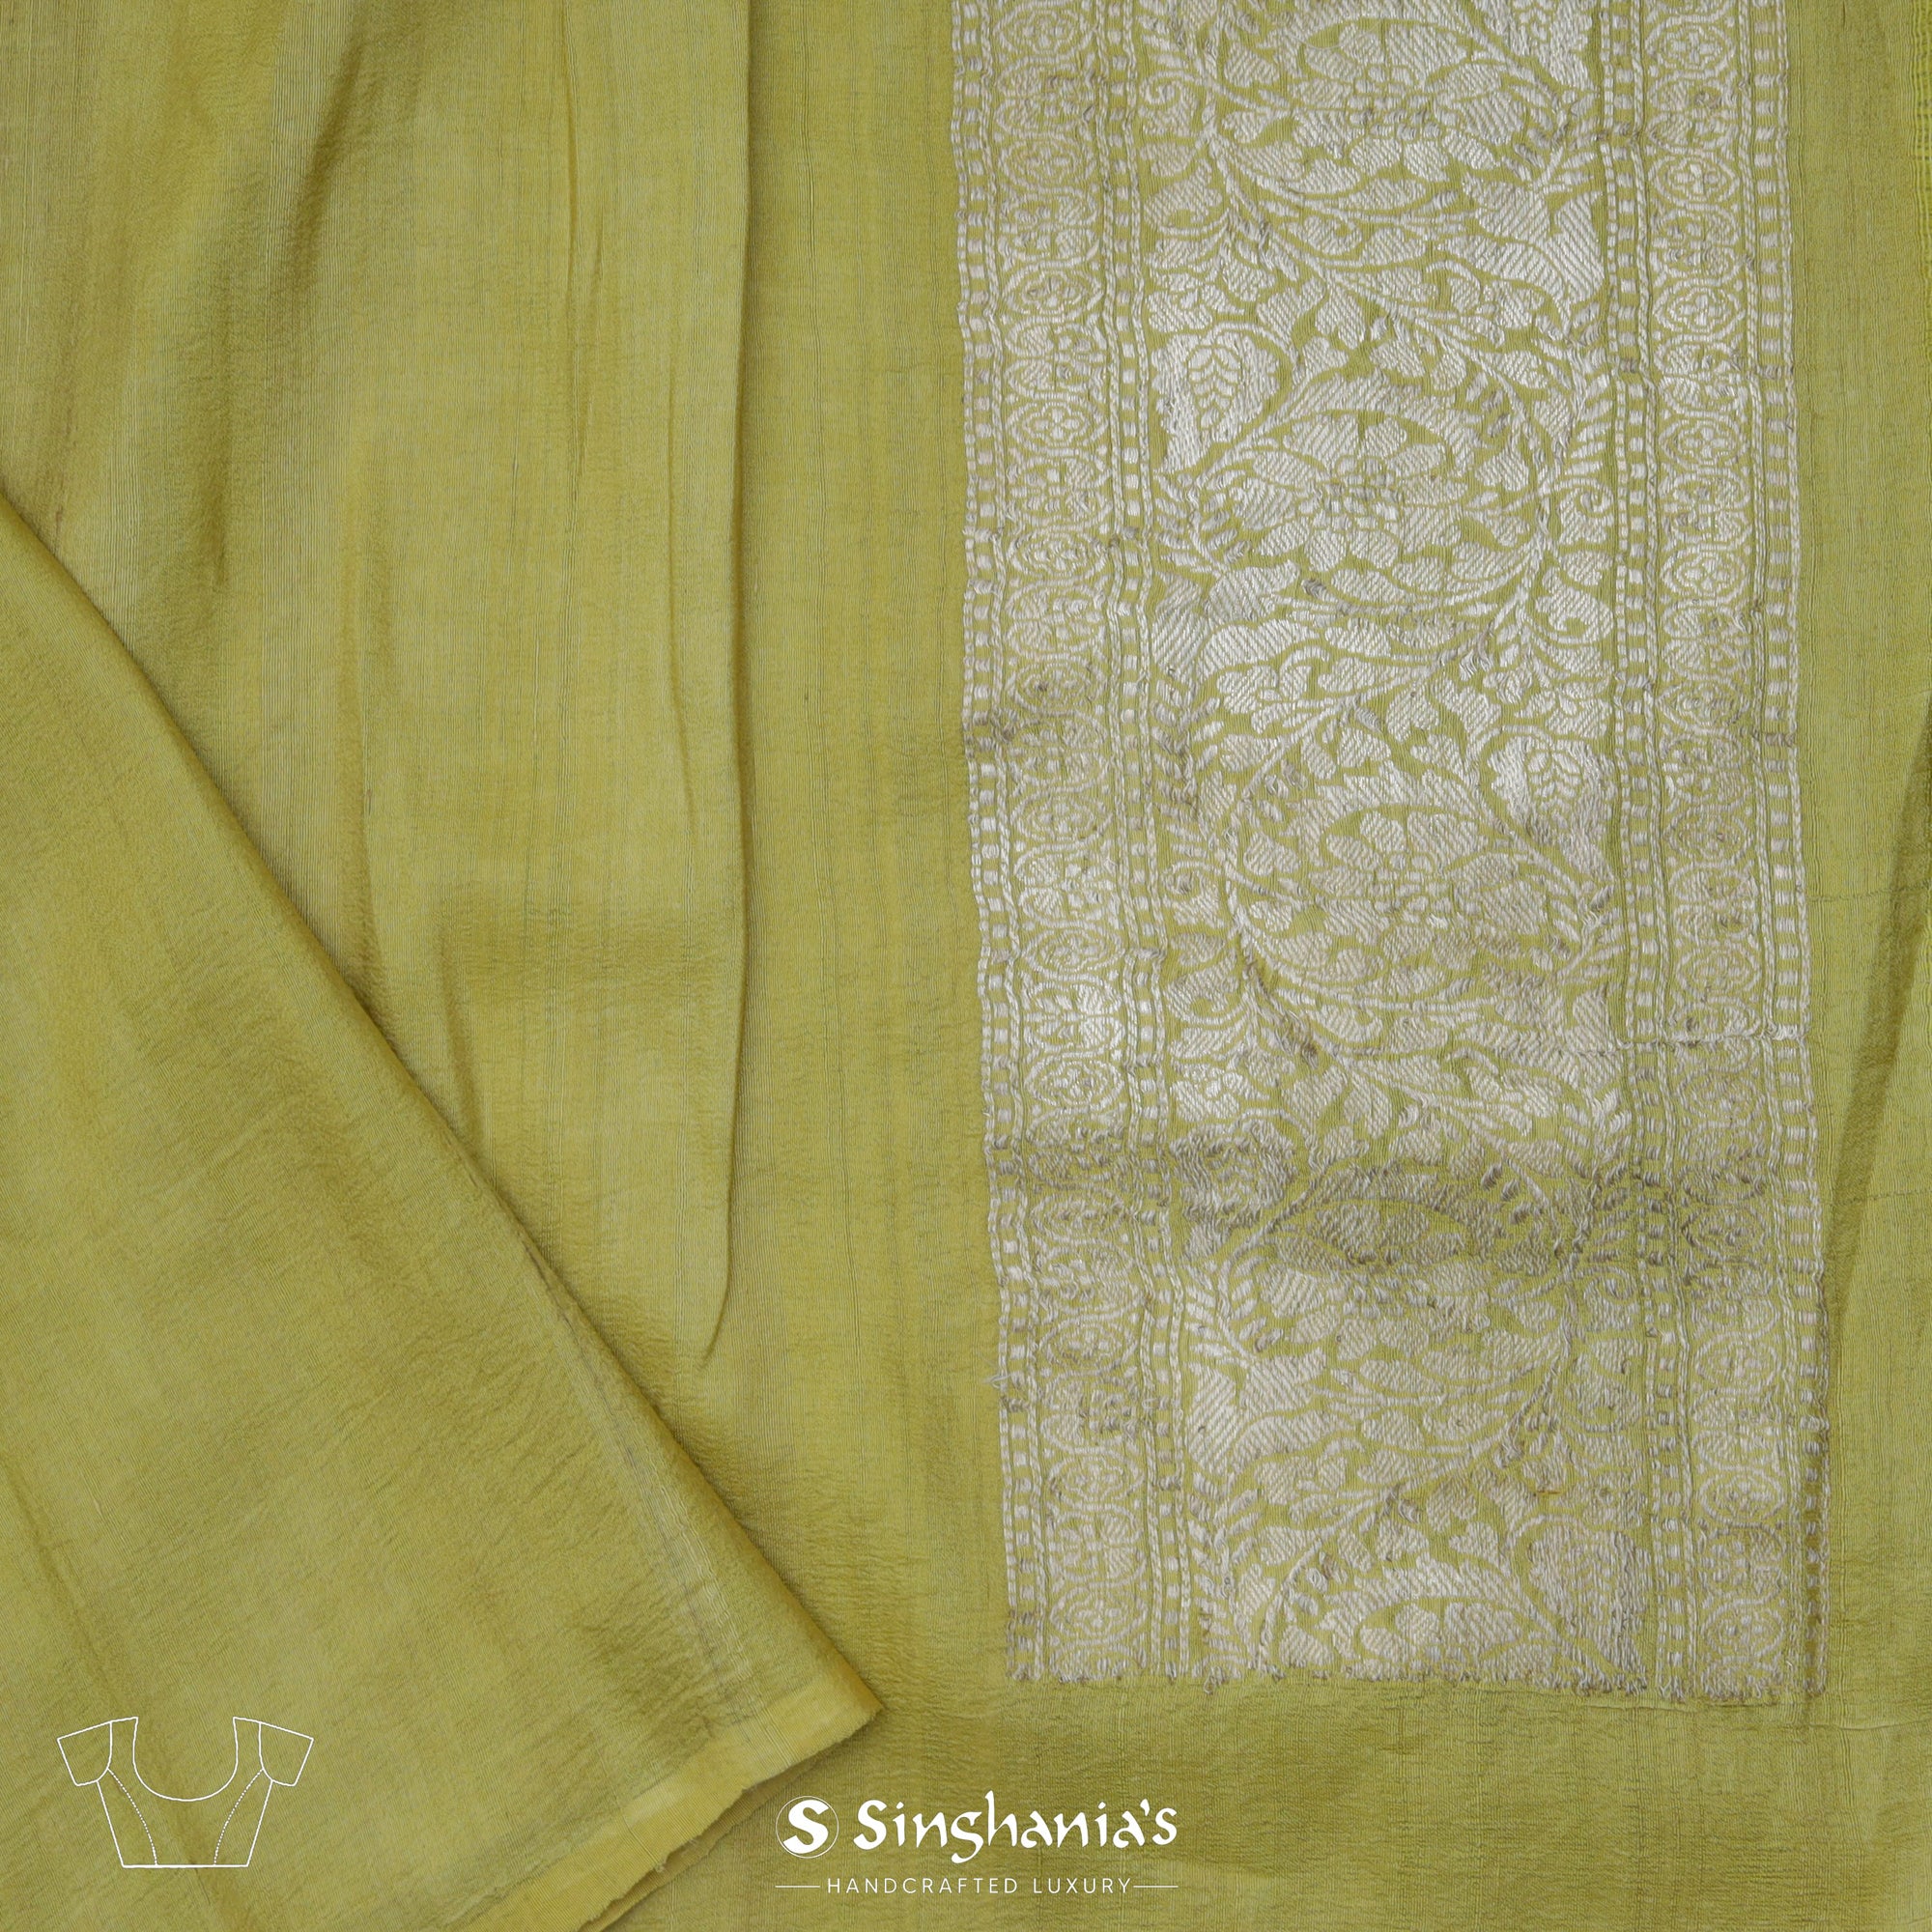 Sulfur Yellow Tussar Jamdhani Saree With Floral Jaal Weaving